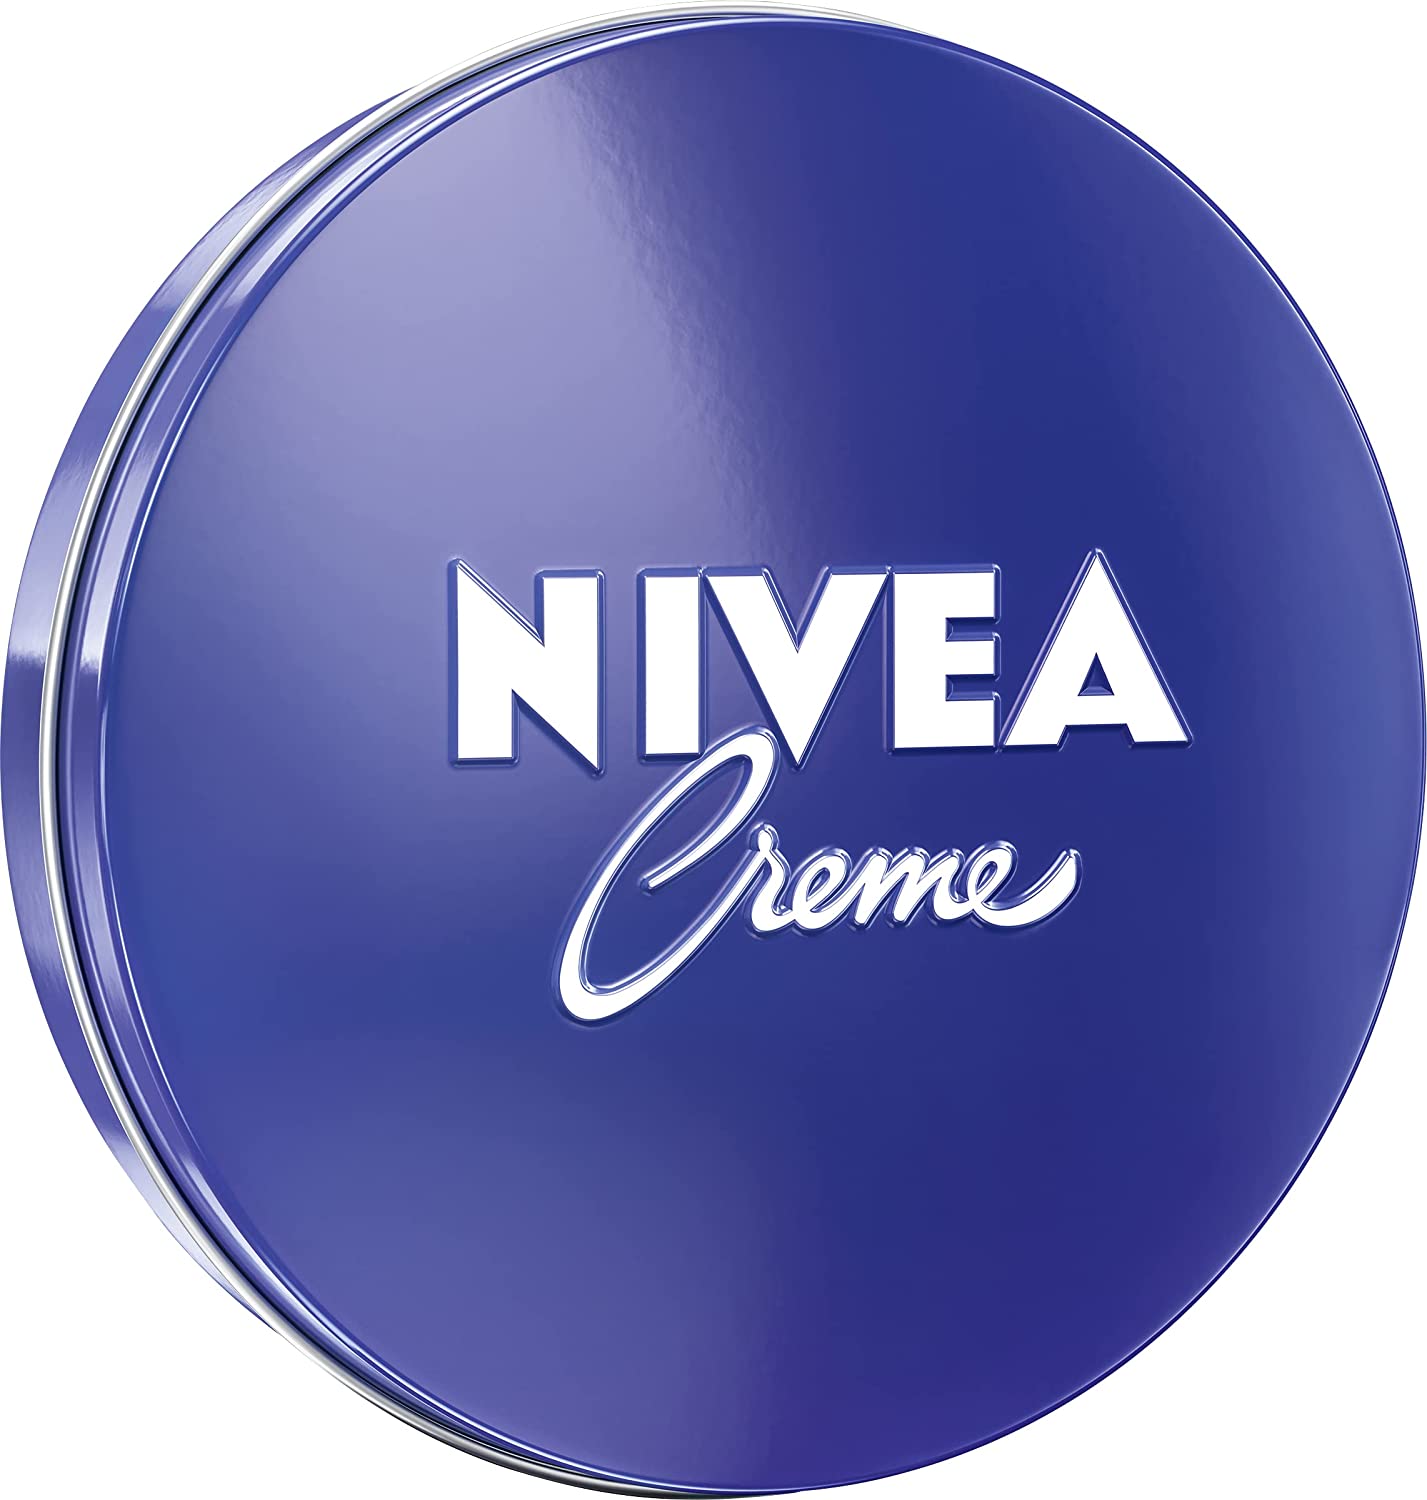 NIVEA cream jar universal care (75 ml), classic moisturizing cream for all skin types, rich skin cream with nourishing Eucerit